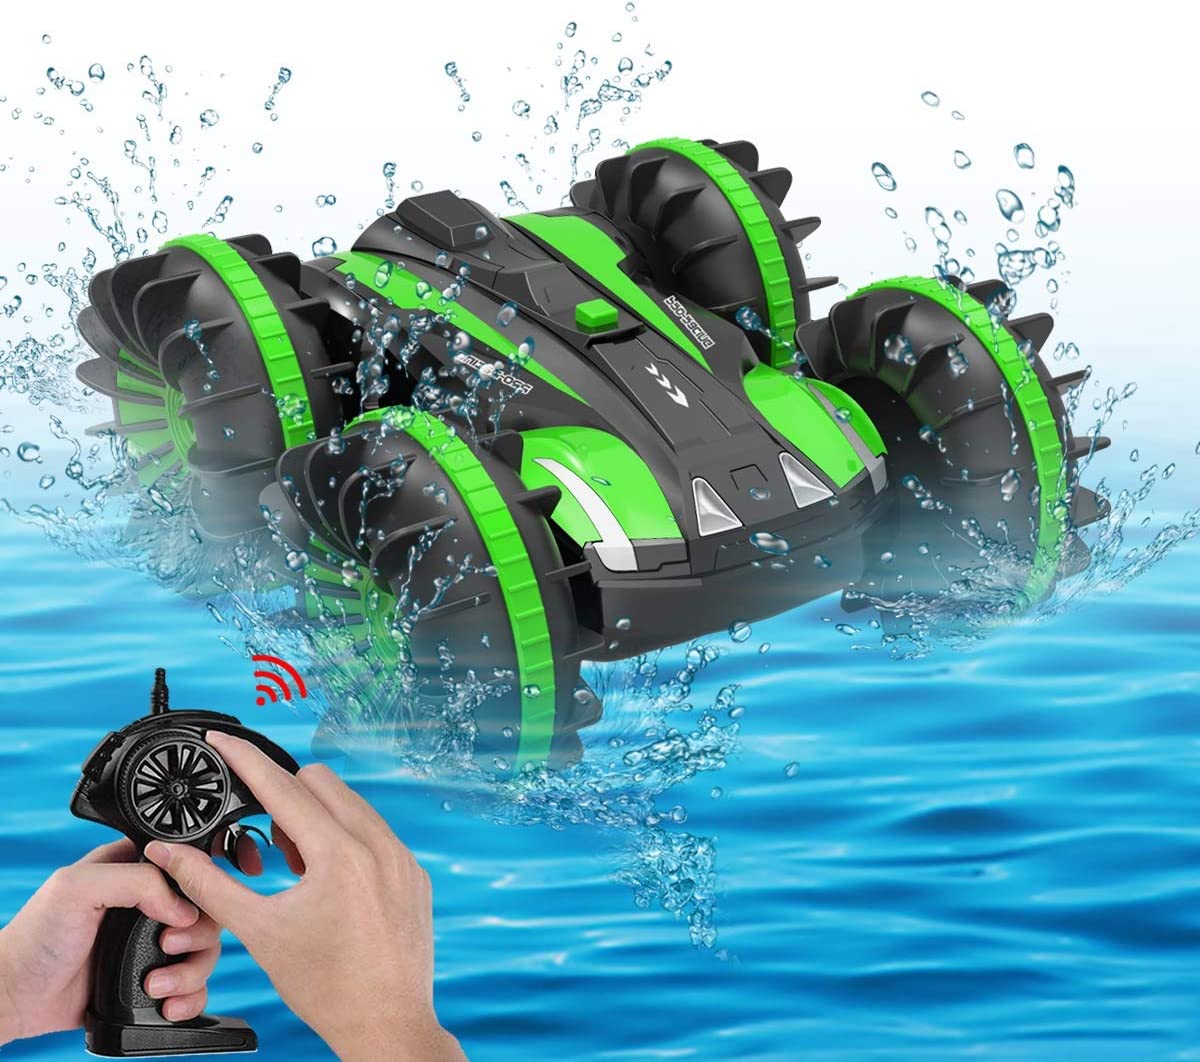 All Terrain Amphibious Waterproof Remote Control Boat & RC Car Pool Toys Green 2 pcs Batteries